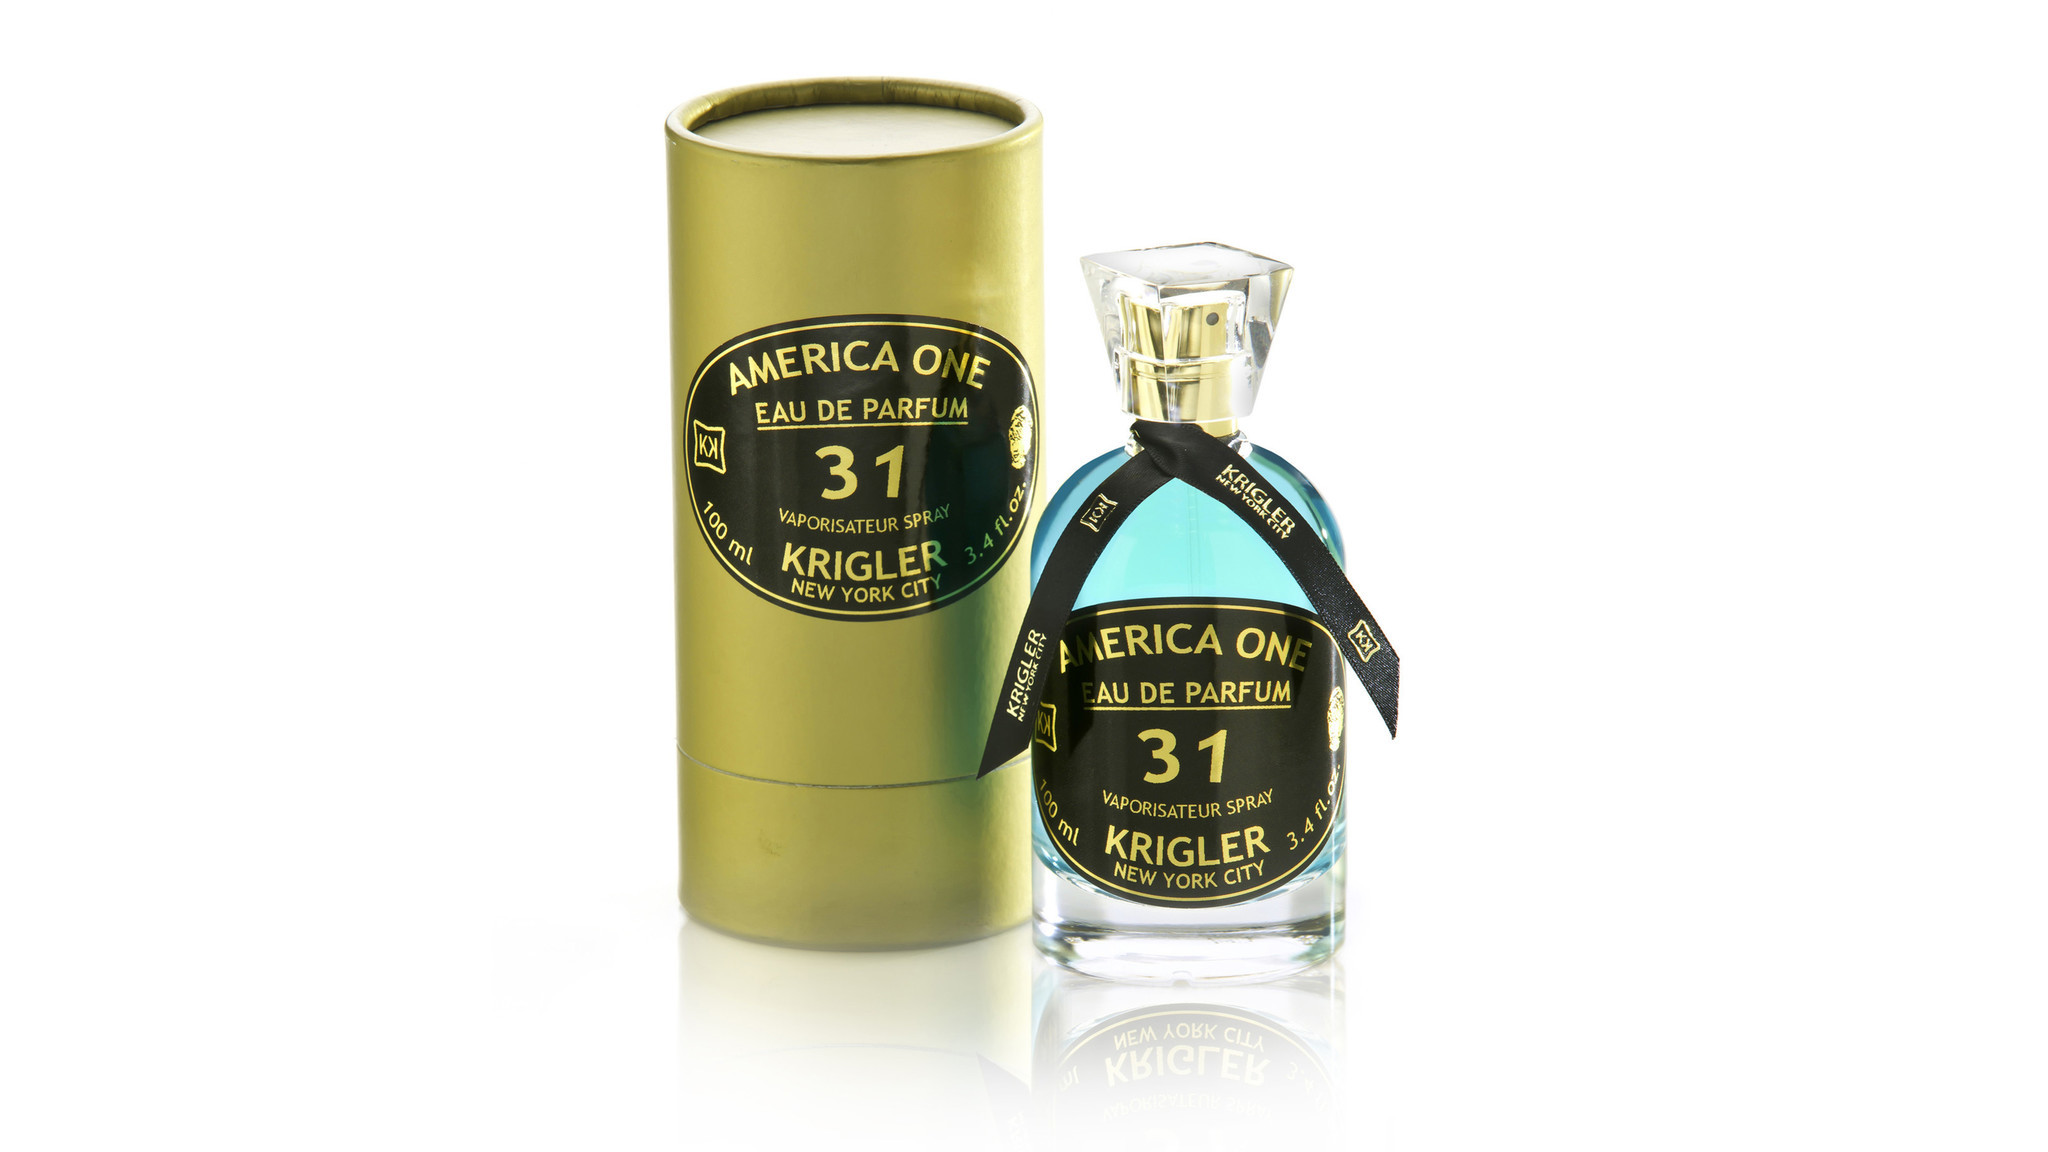 Krigler's America One 31 perfume.